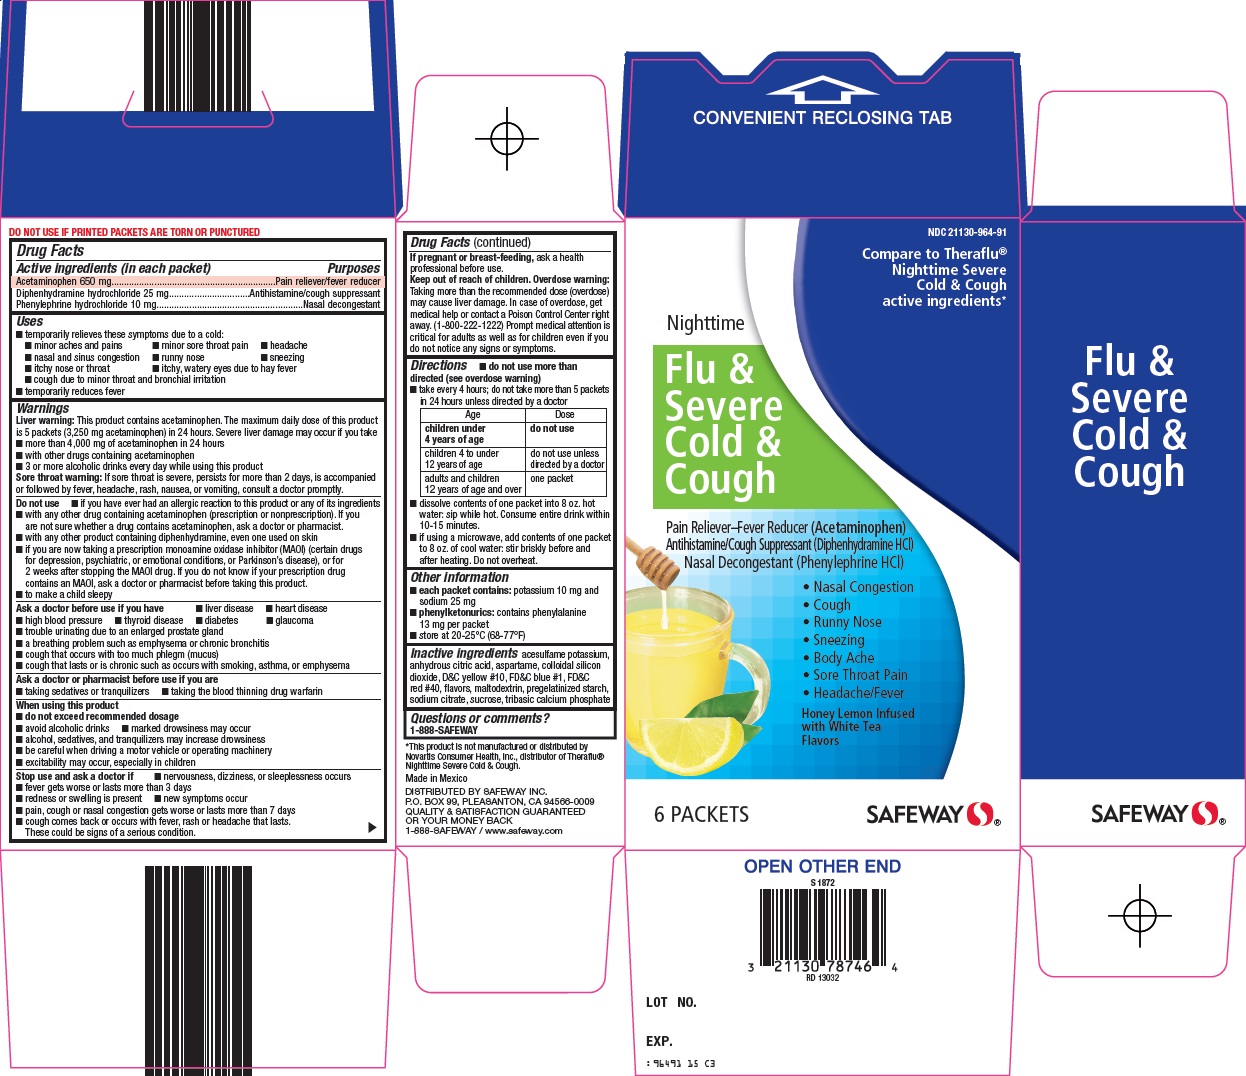 Safeway Inc. Flu & Severe Cold & Cough